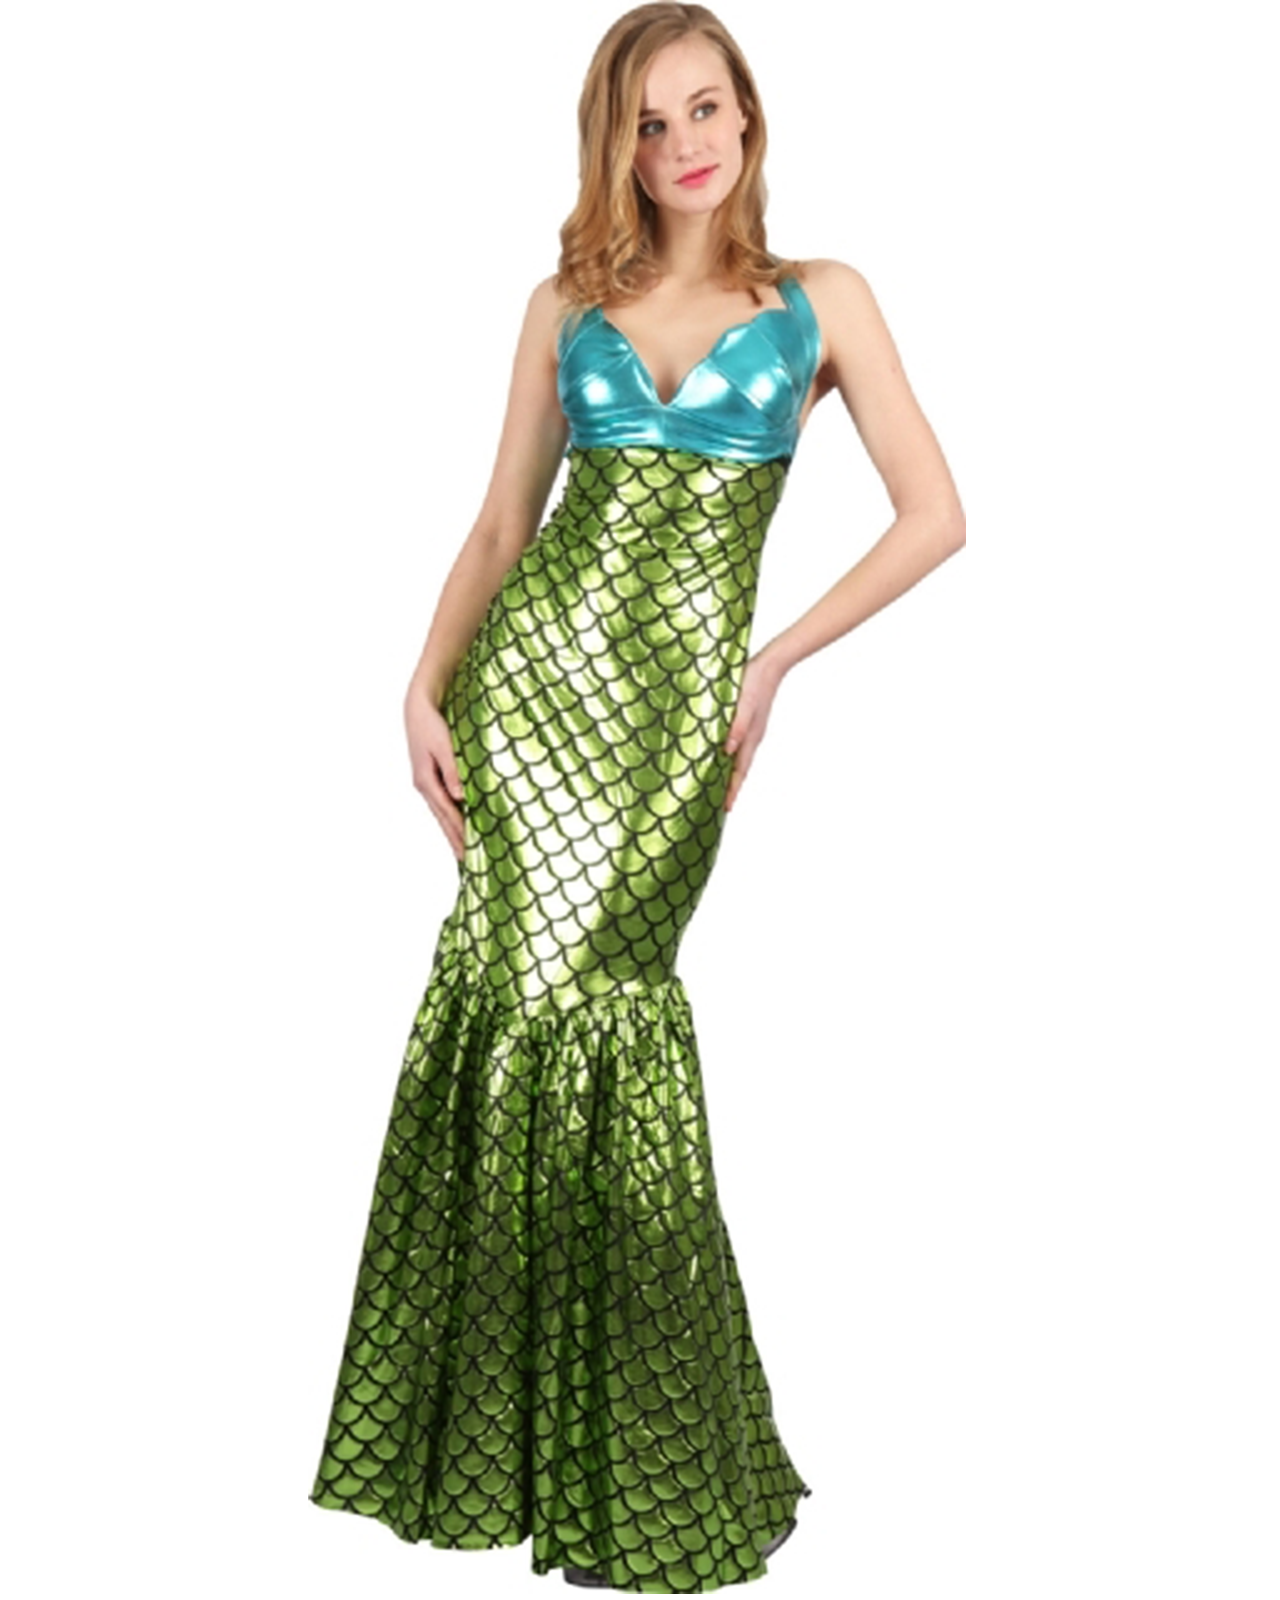 Mythical Mermaid Dress